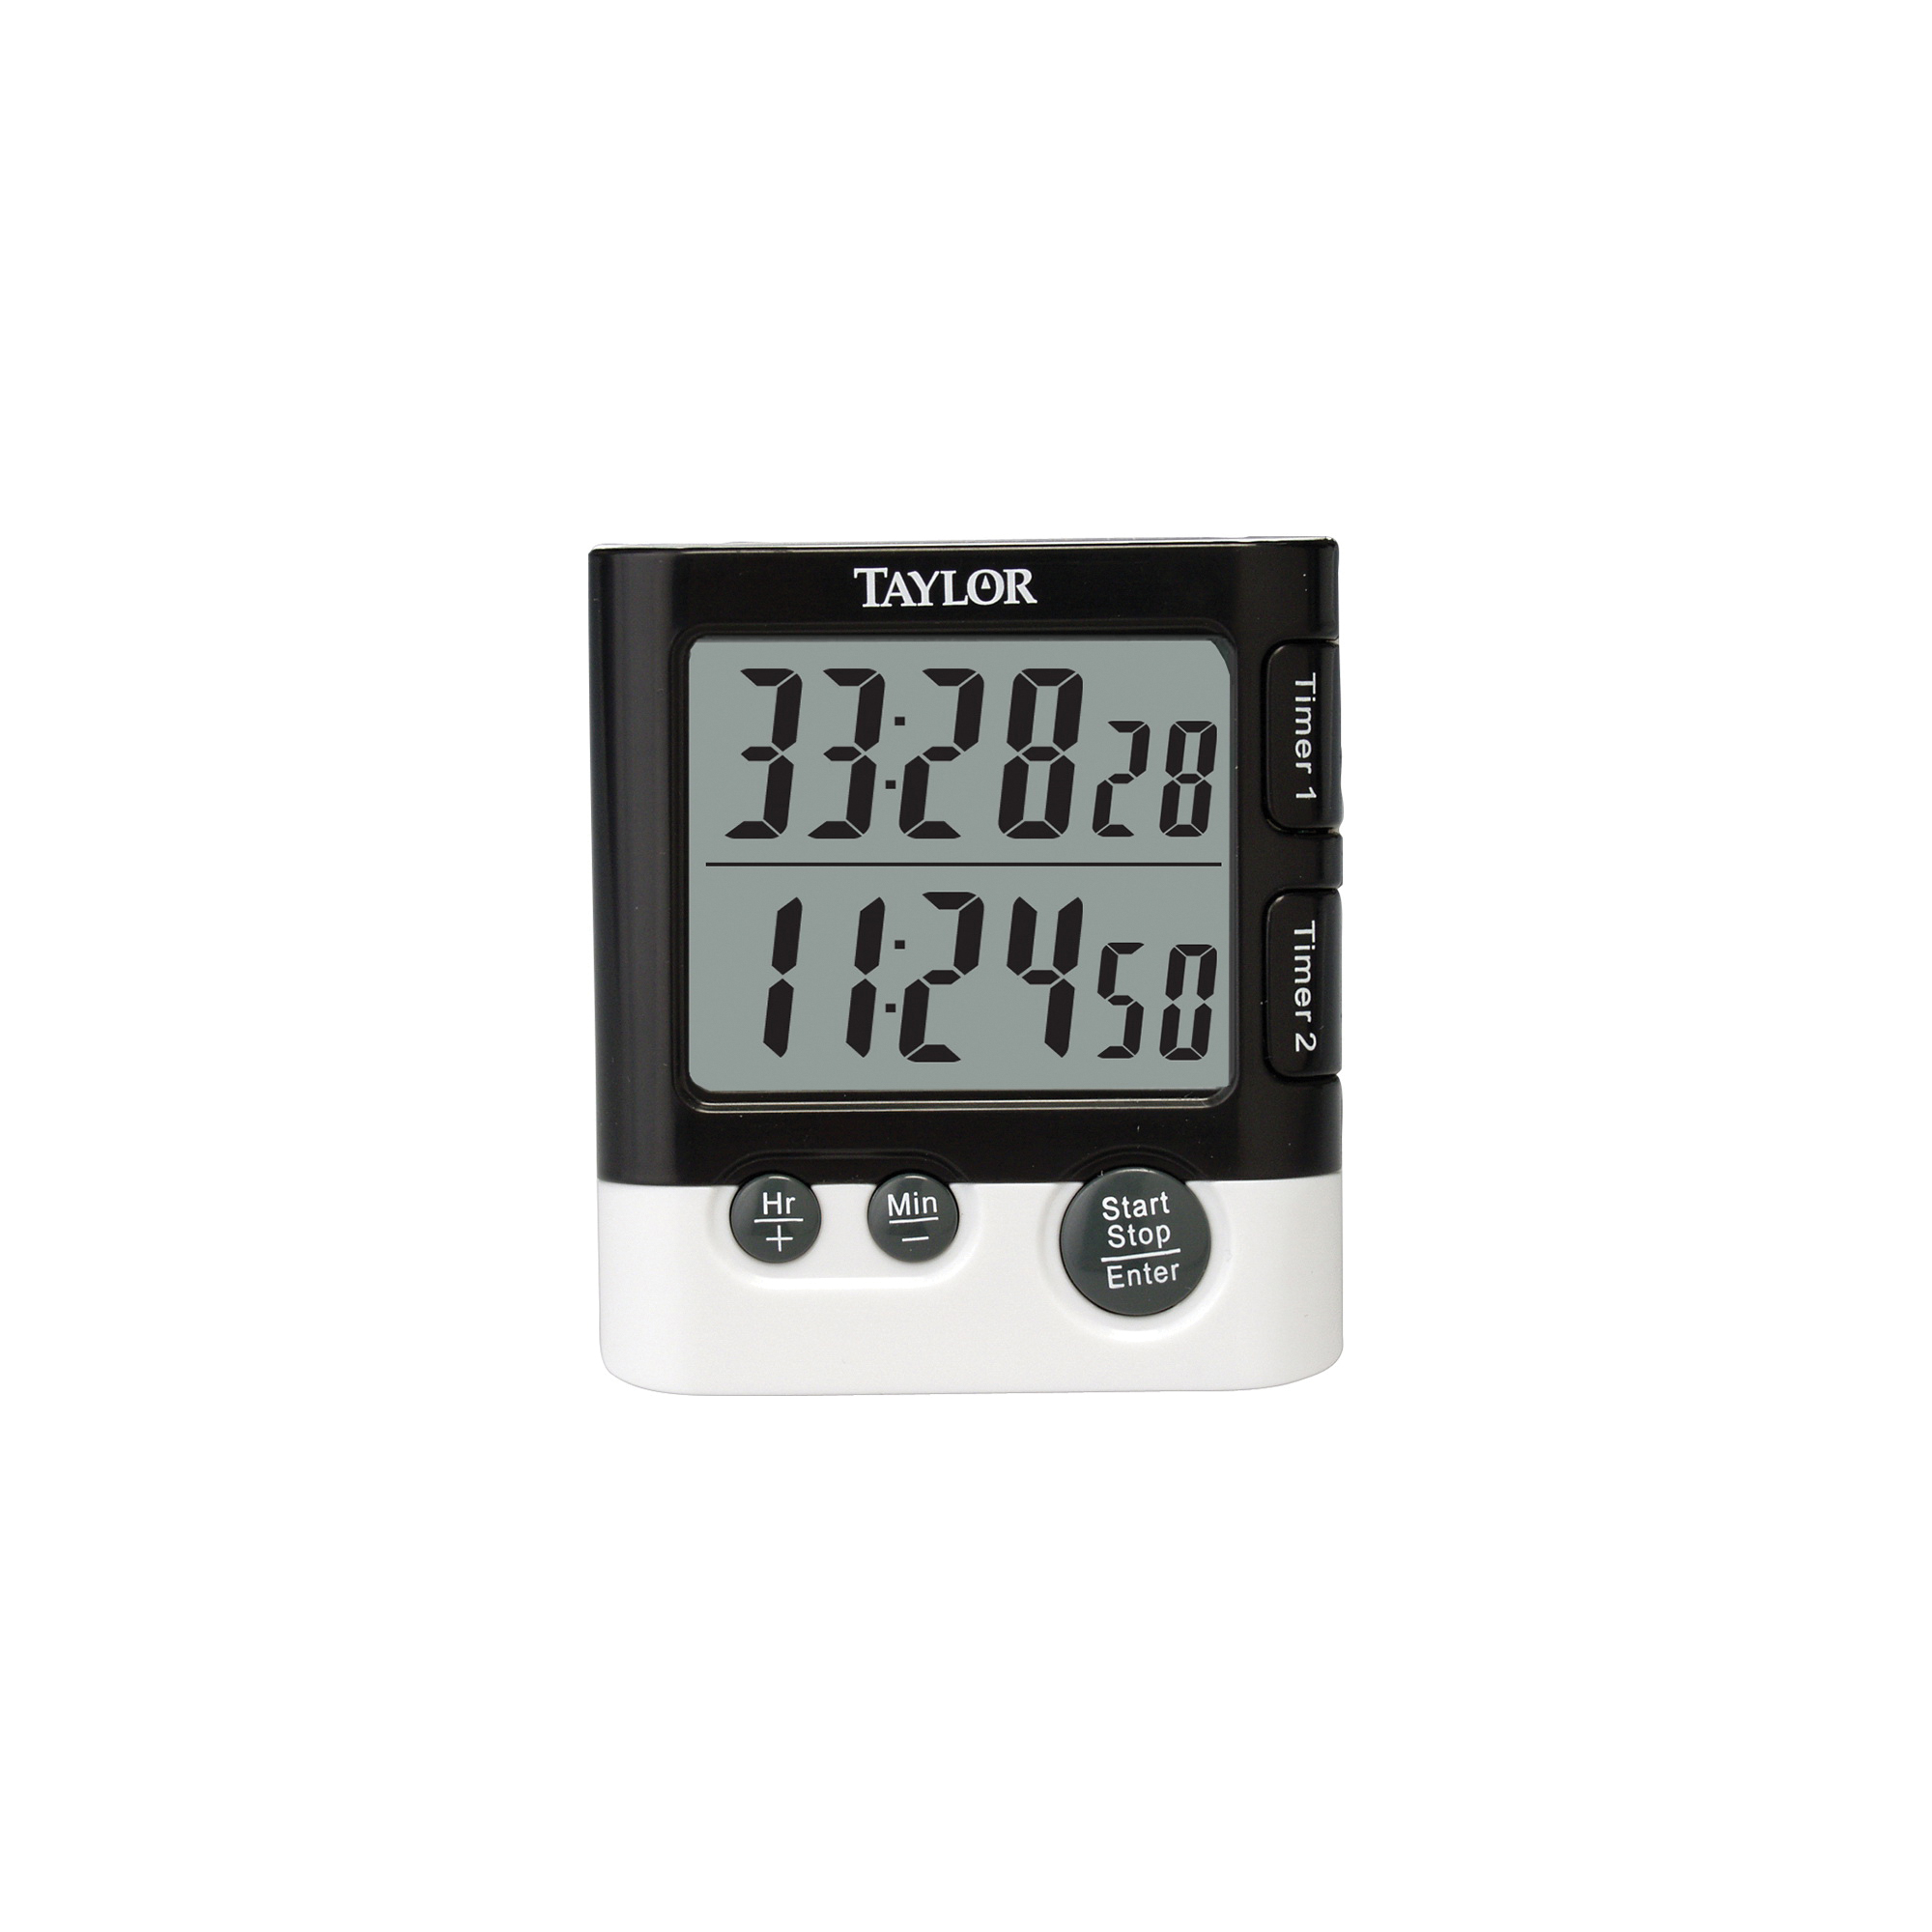 Taylor 5828 Timer/Clock, Digital, LCD Display, 23 hr 59 m